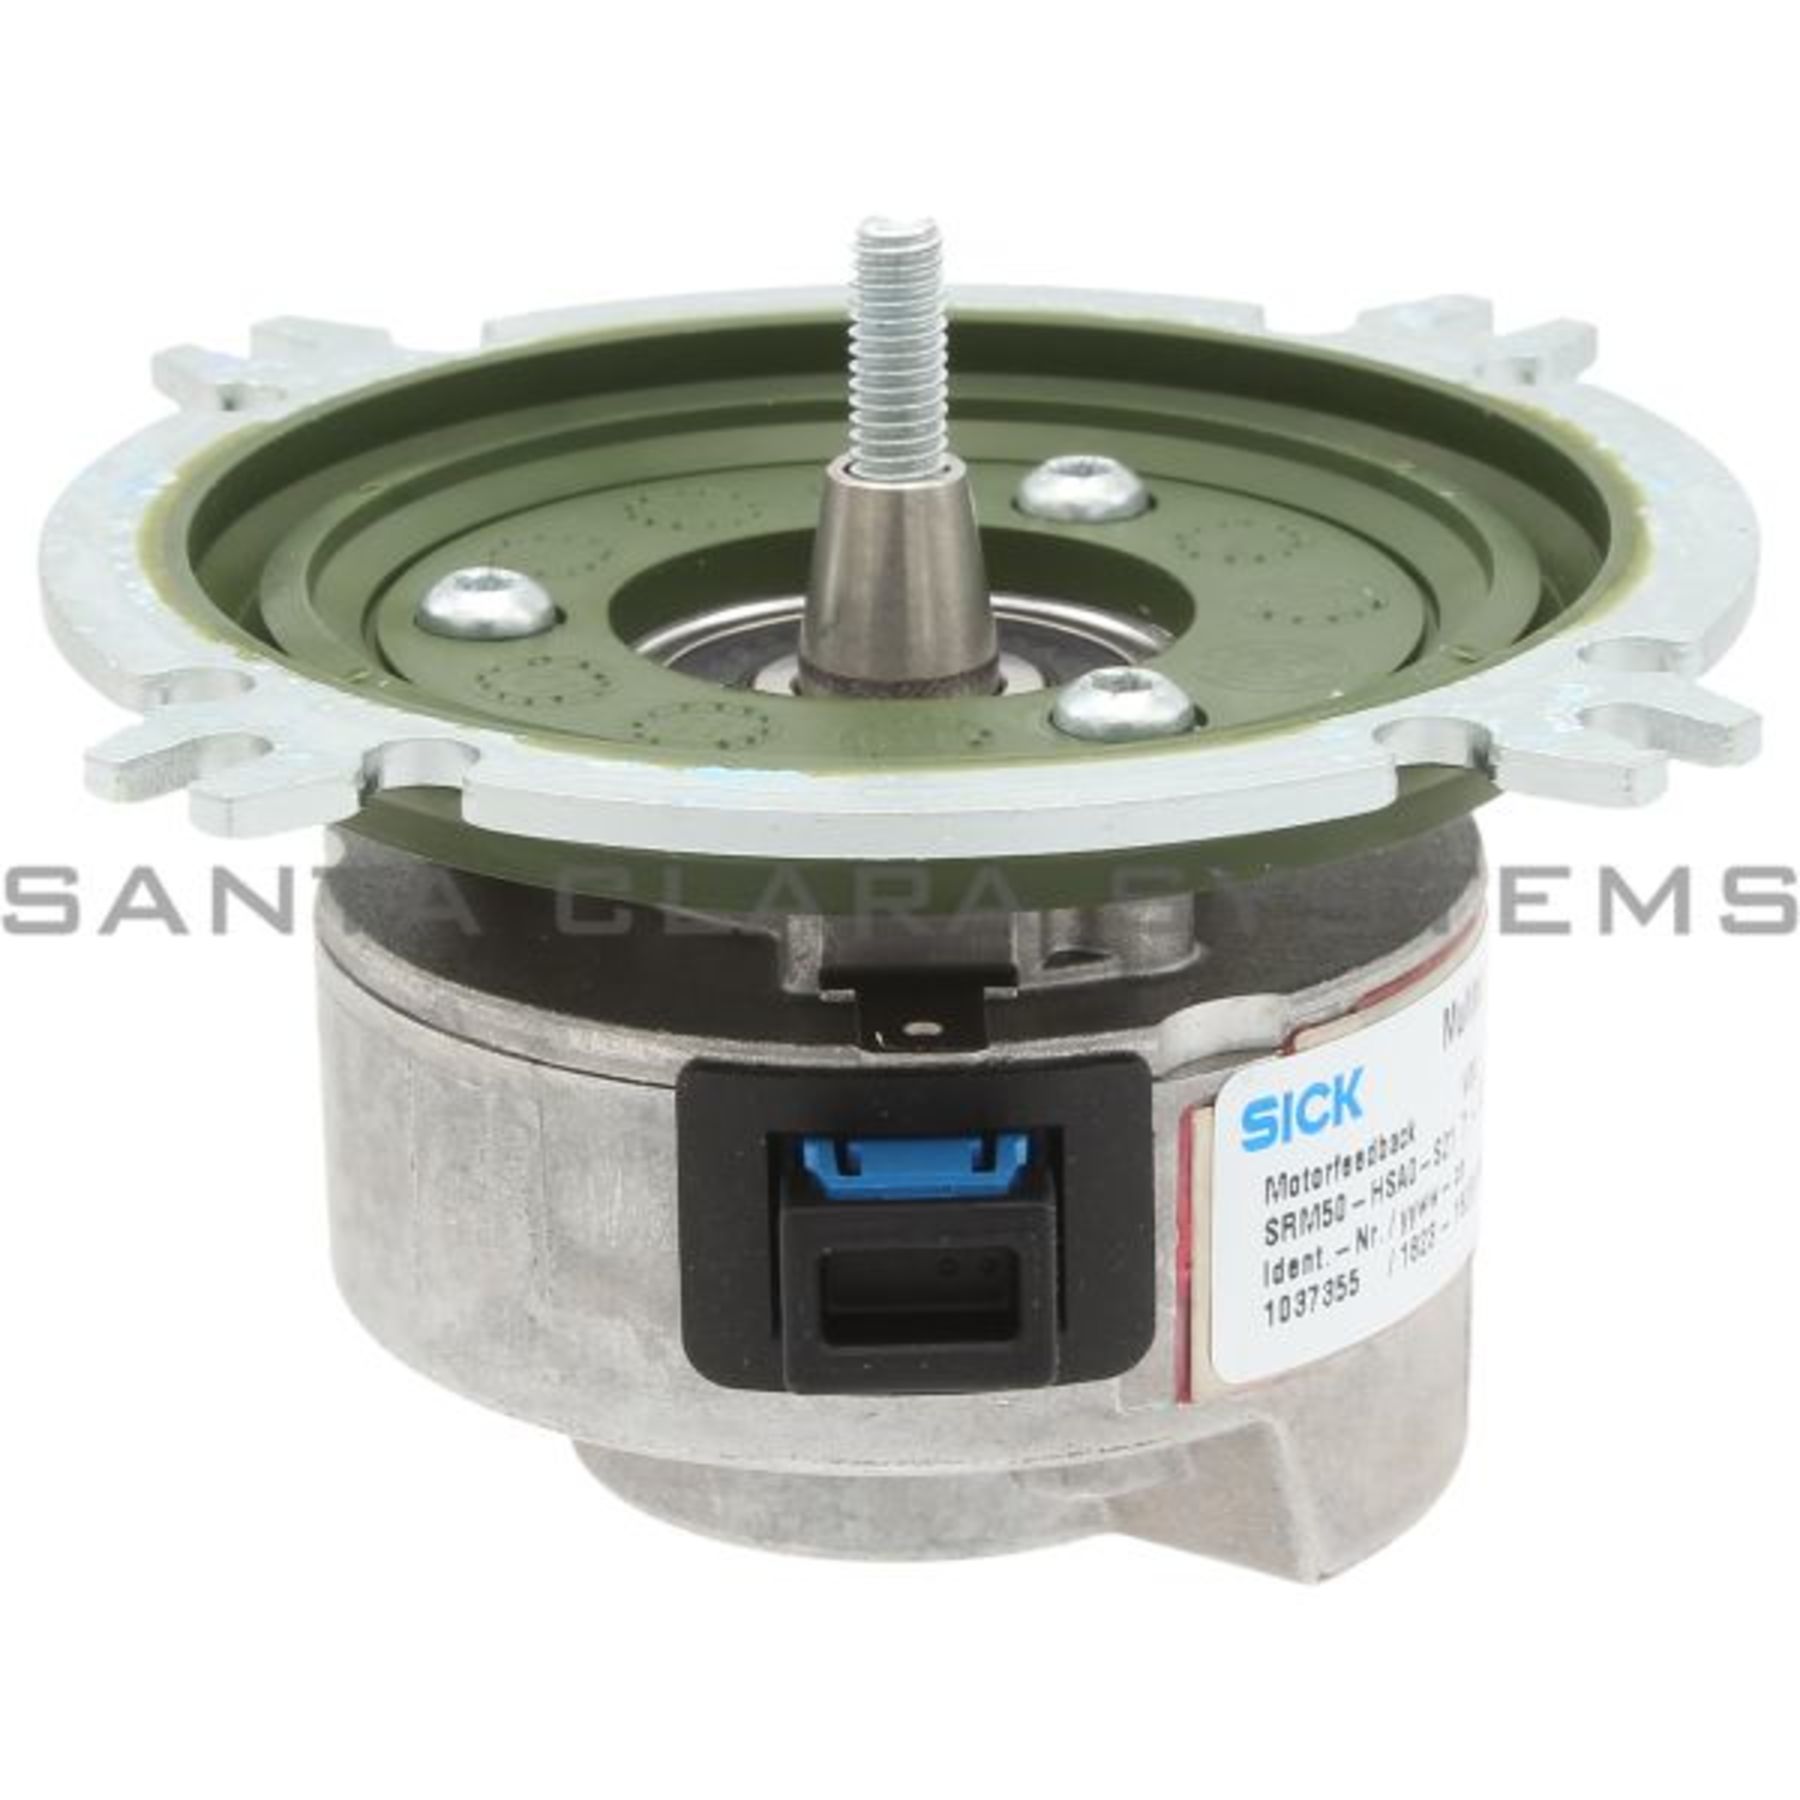 SRM50-HSA0-S21 Sick Encoder | 1037355 - Santa Clara Systems